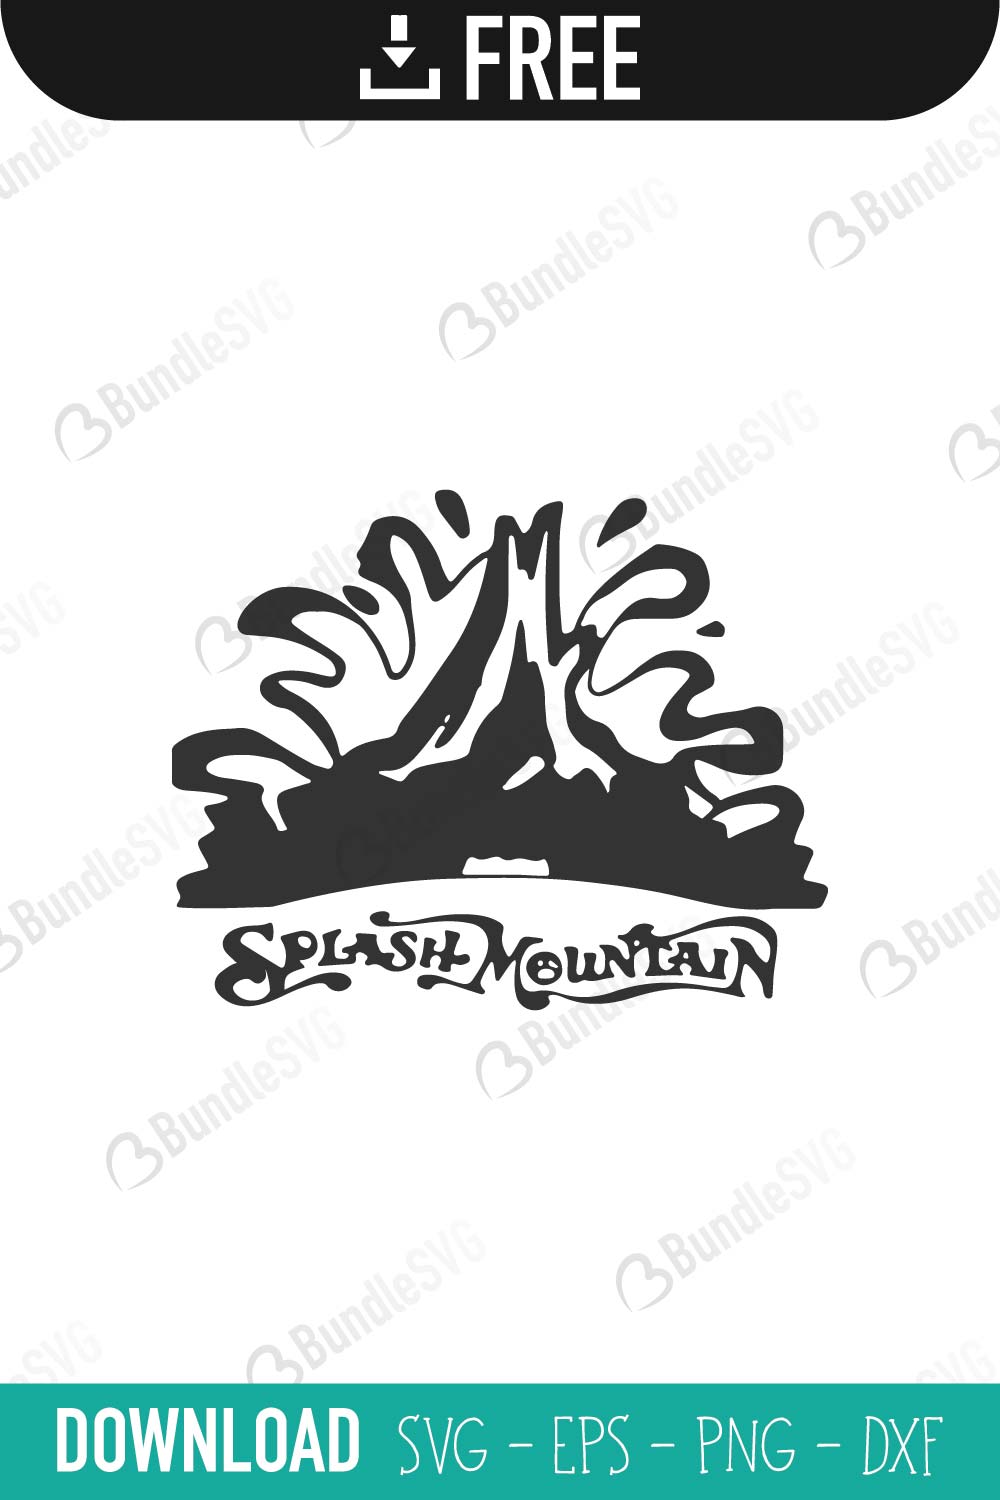 Splash Mountain SVG Cut Files Free Download | BundleSVG.com